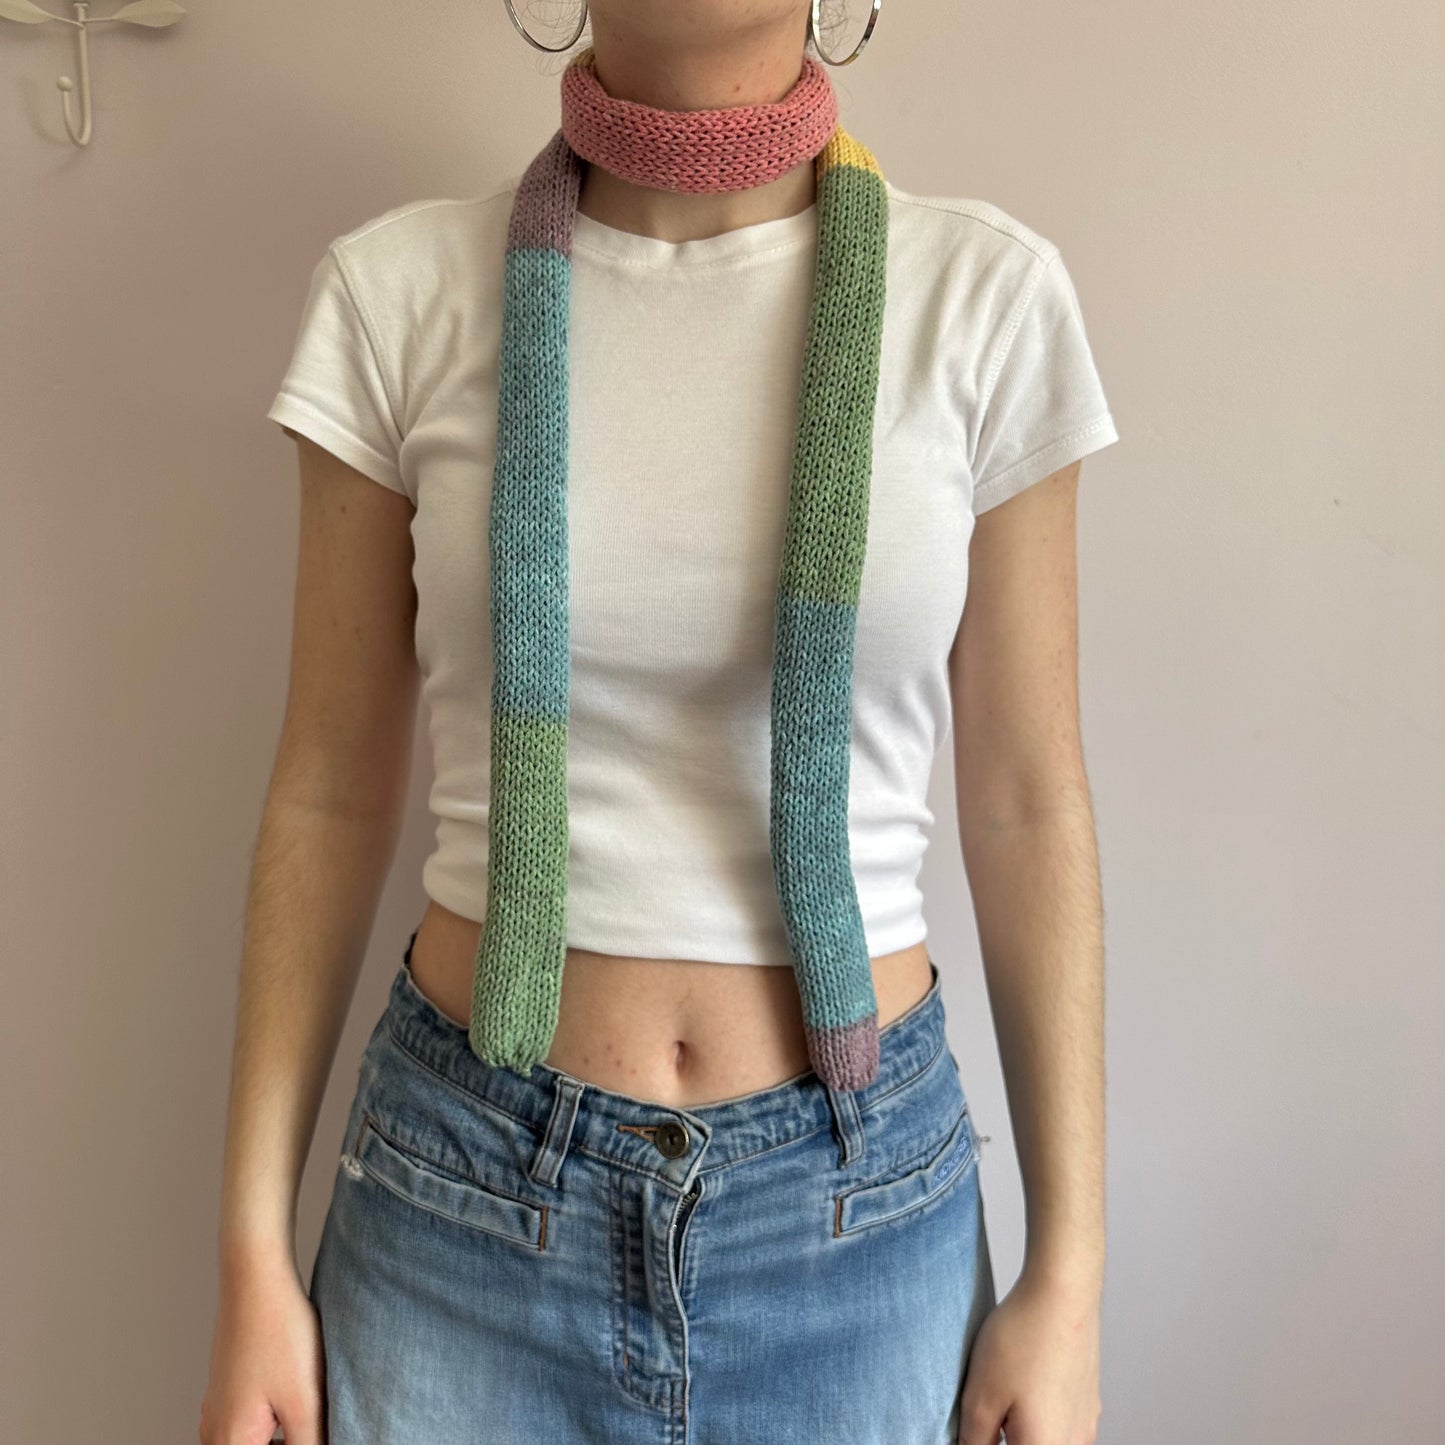 Handmade knitted colour block skinny scarf in dusky rainbow